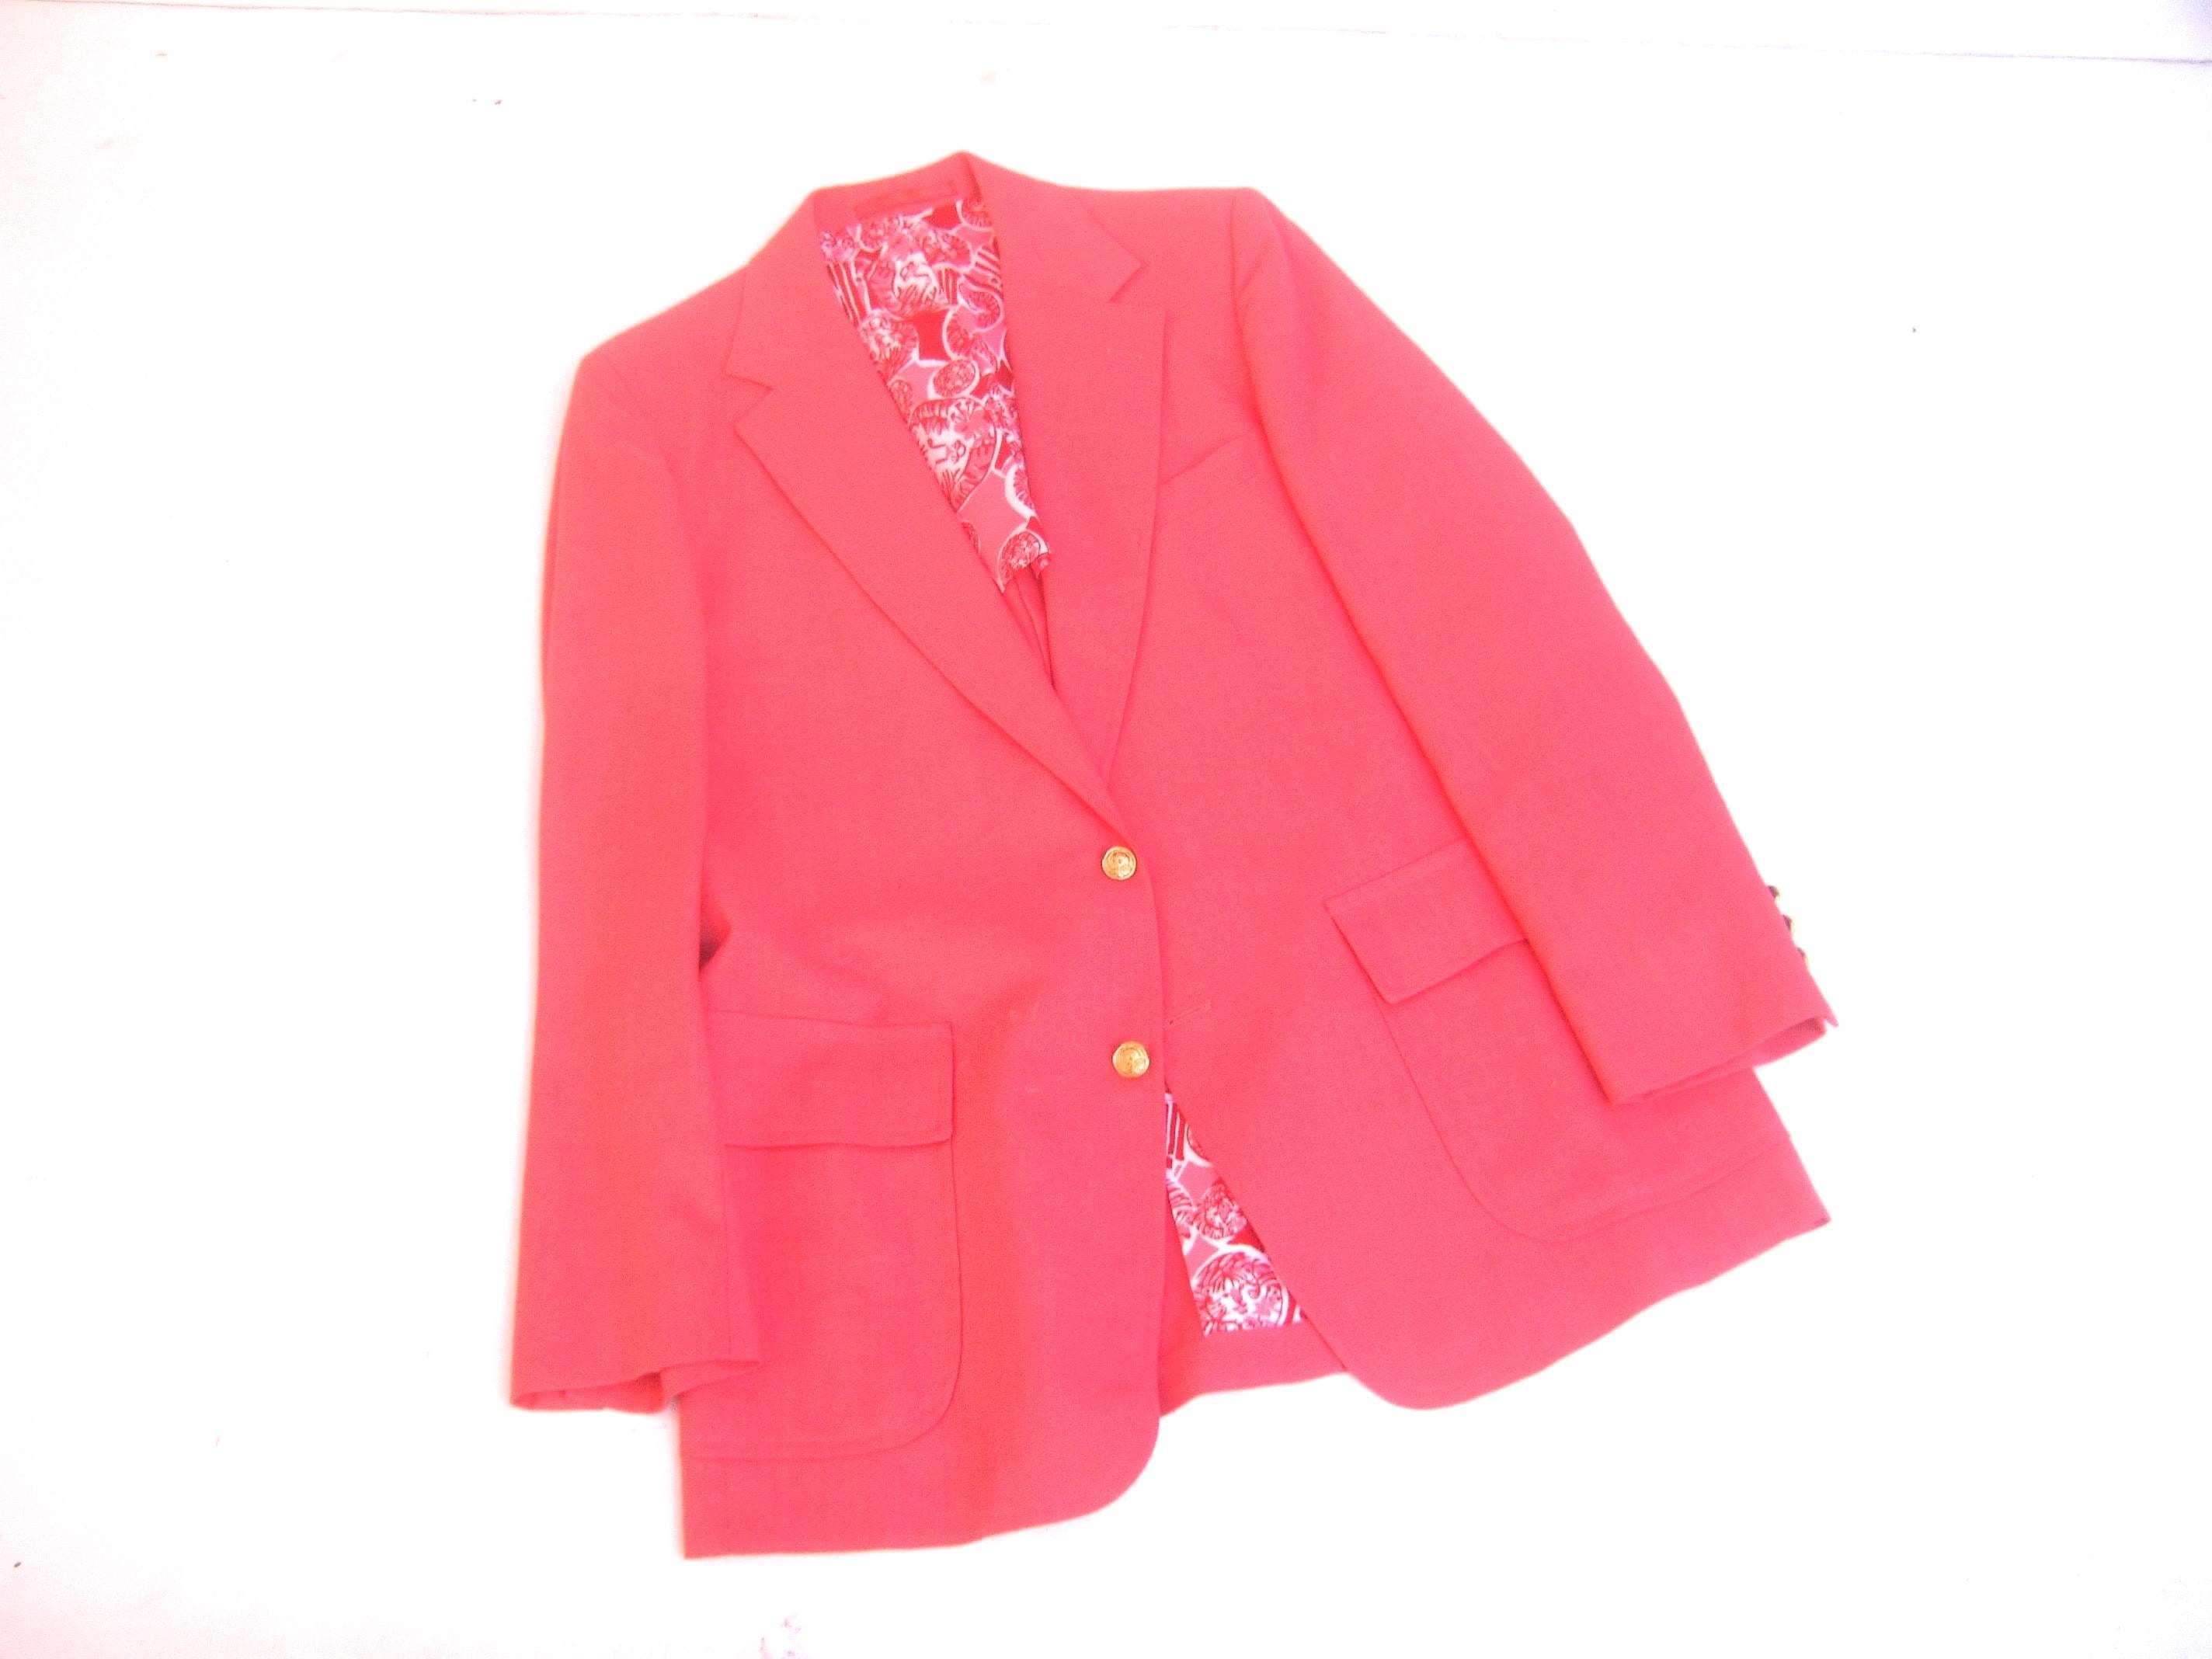 Lilly Pulitzer Men's Coral Pink Resort Sports Jacket circa 1970s 7